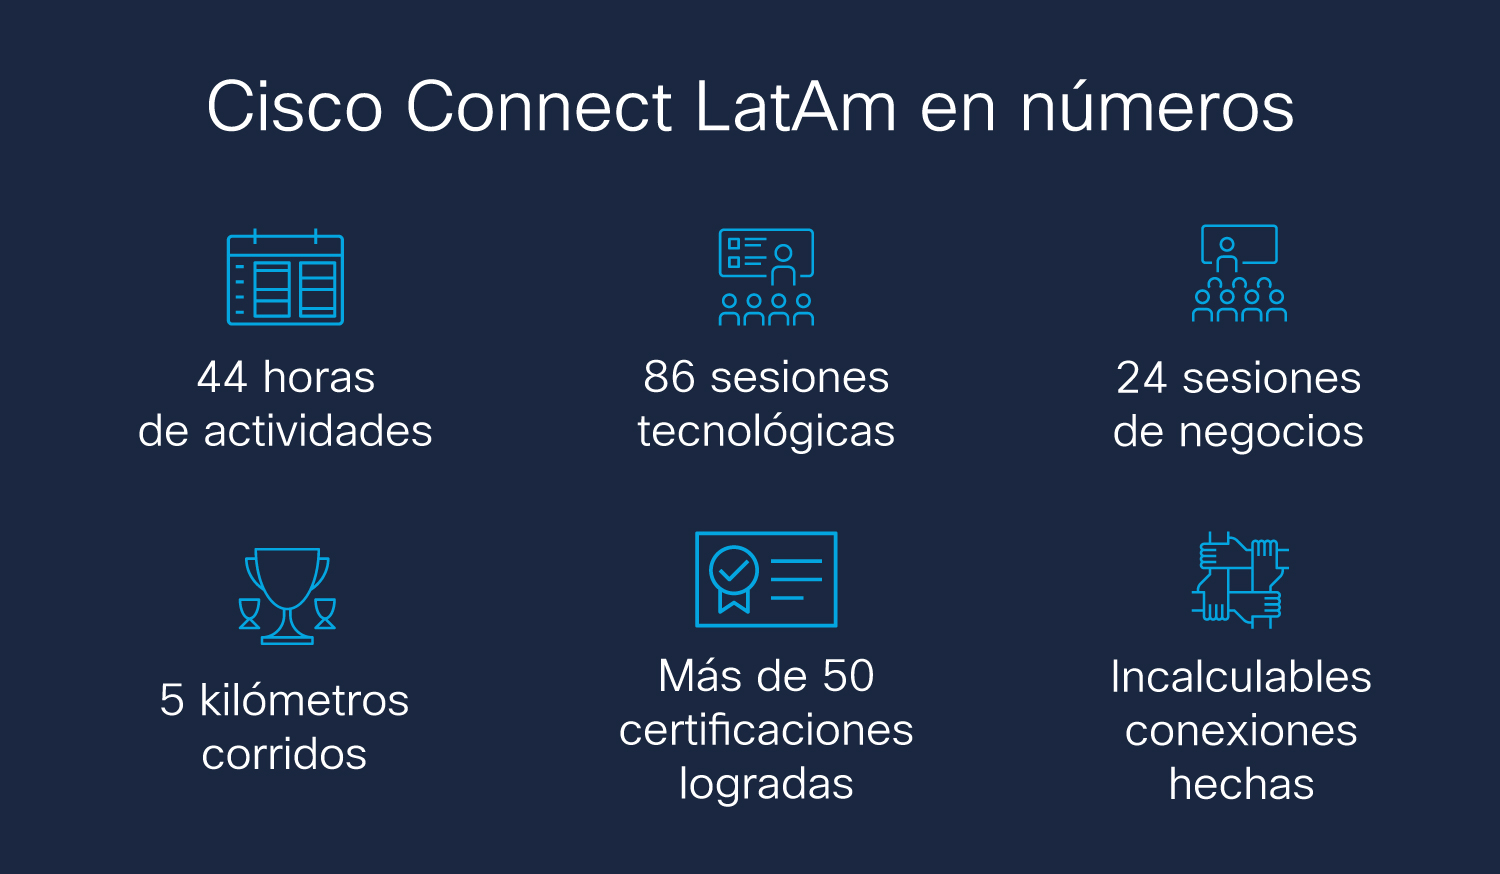 Asistentes a Cisco Connect LatAm